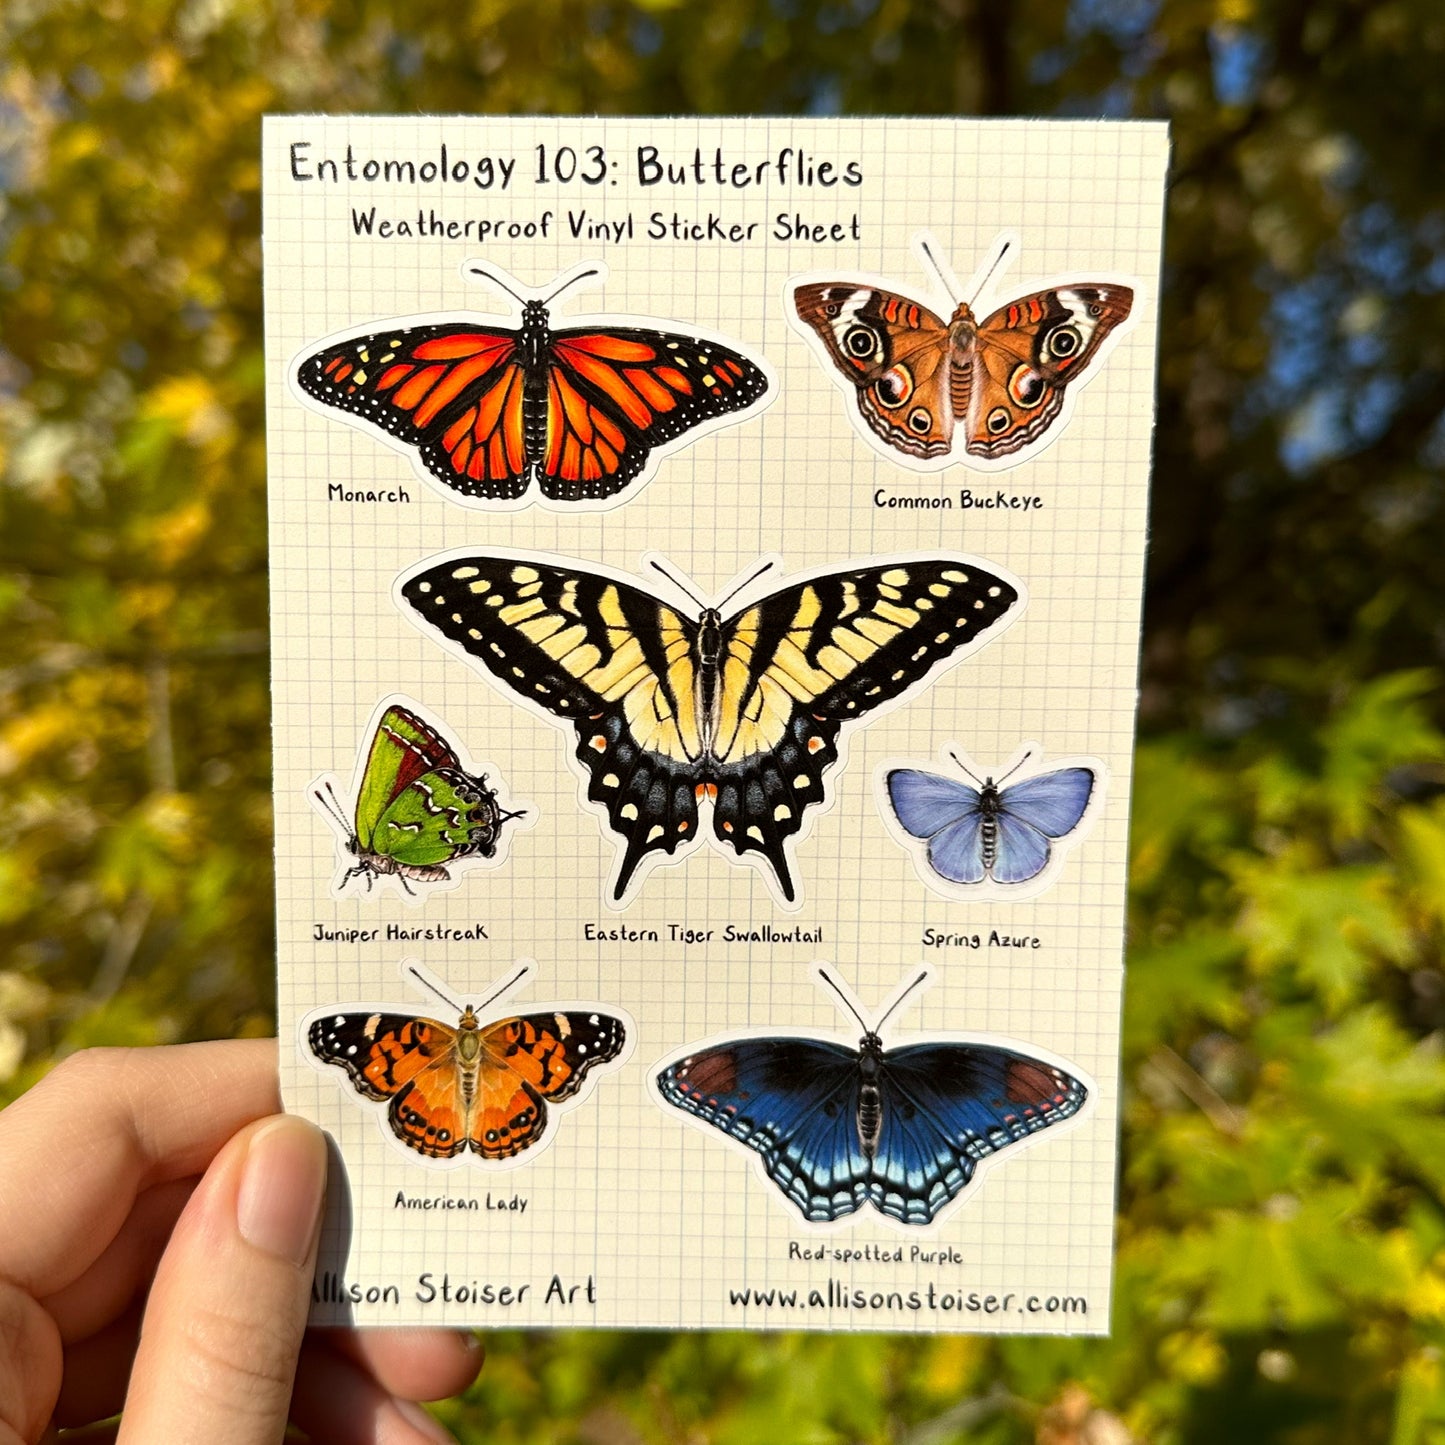 Entomology 103: Butterflies Weatherproof Vinyl Sticker Sheet